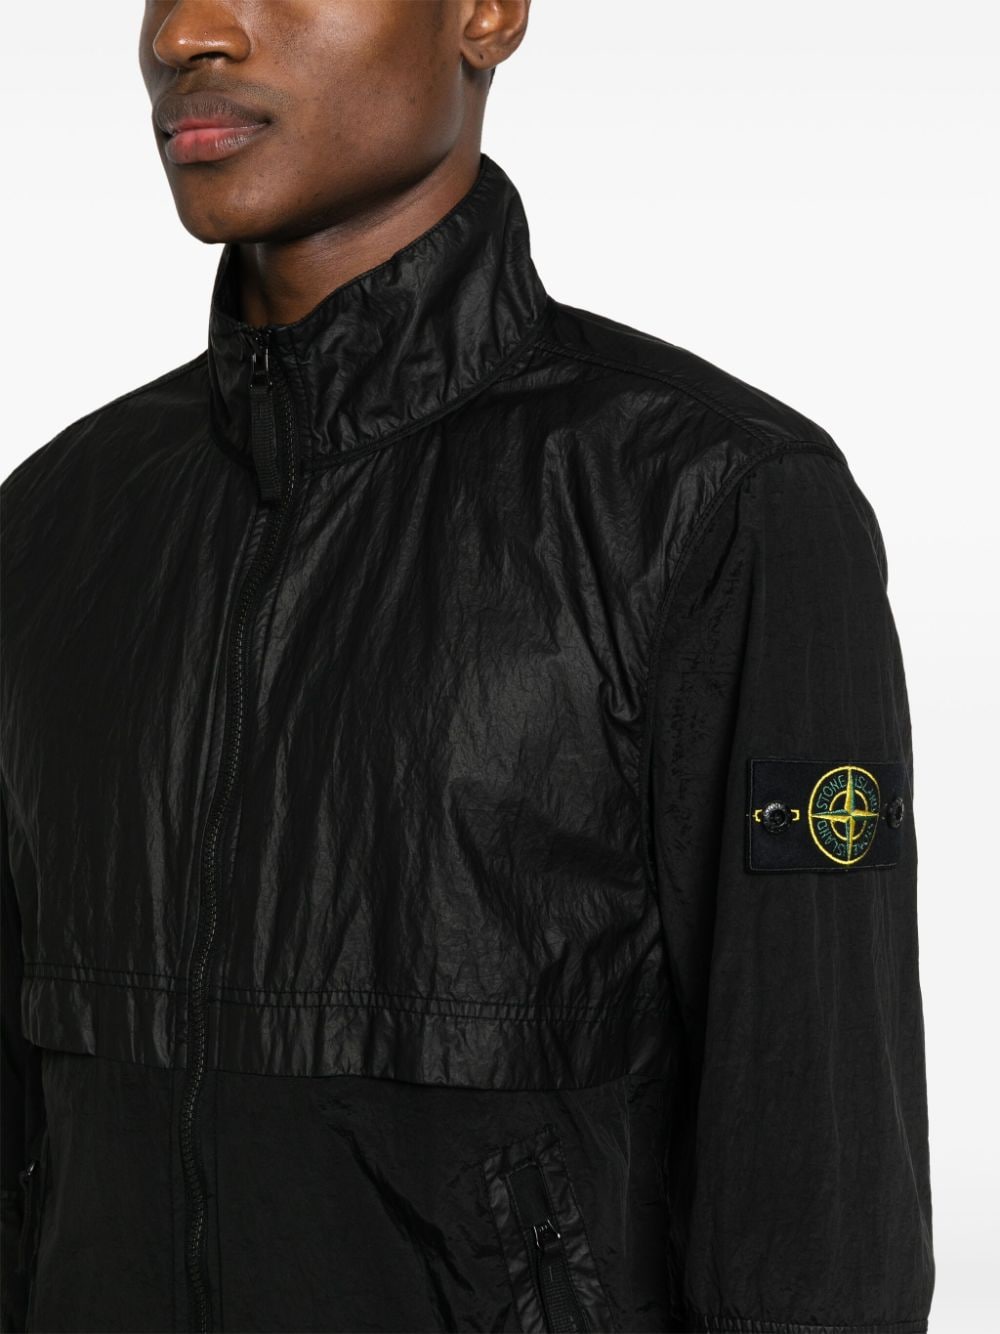 STONE ISLAND Black Nylon Zipped Jacket for Men - Lightweight and Stylish for SS24